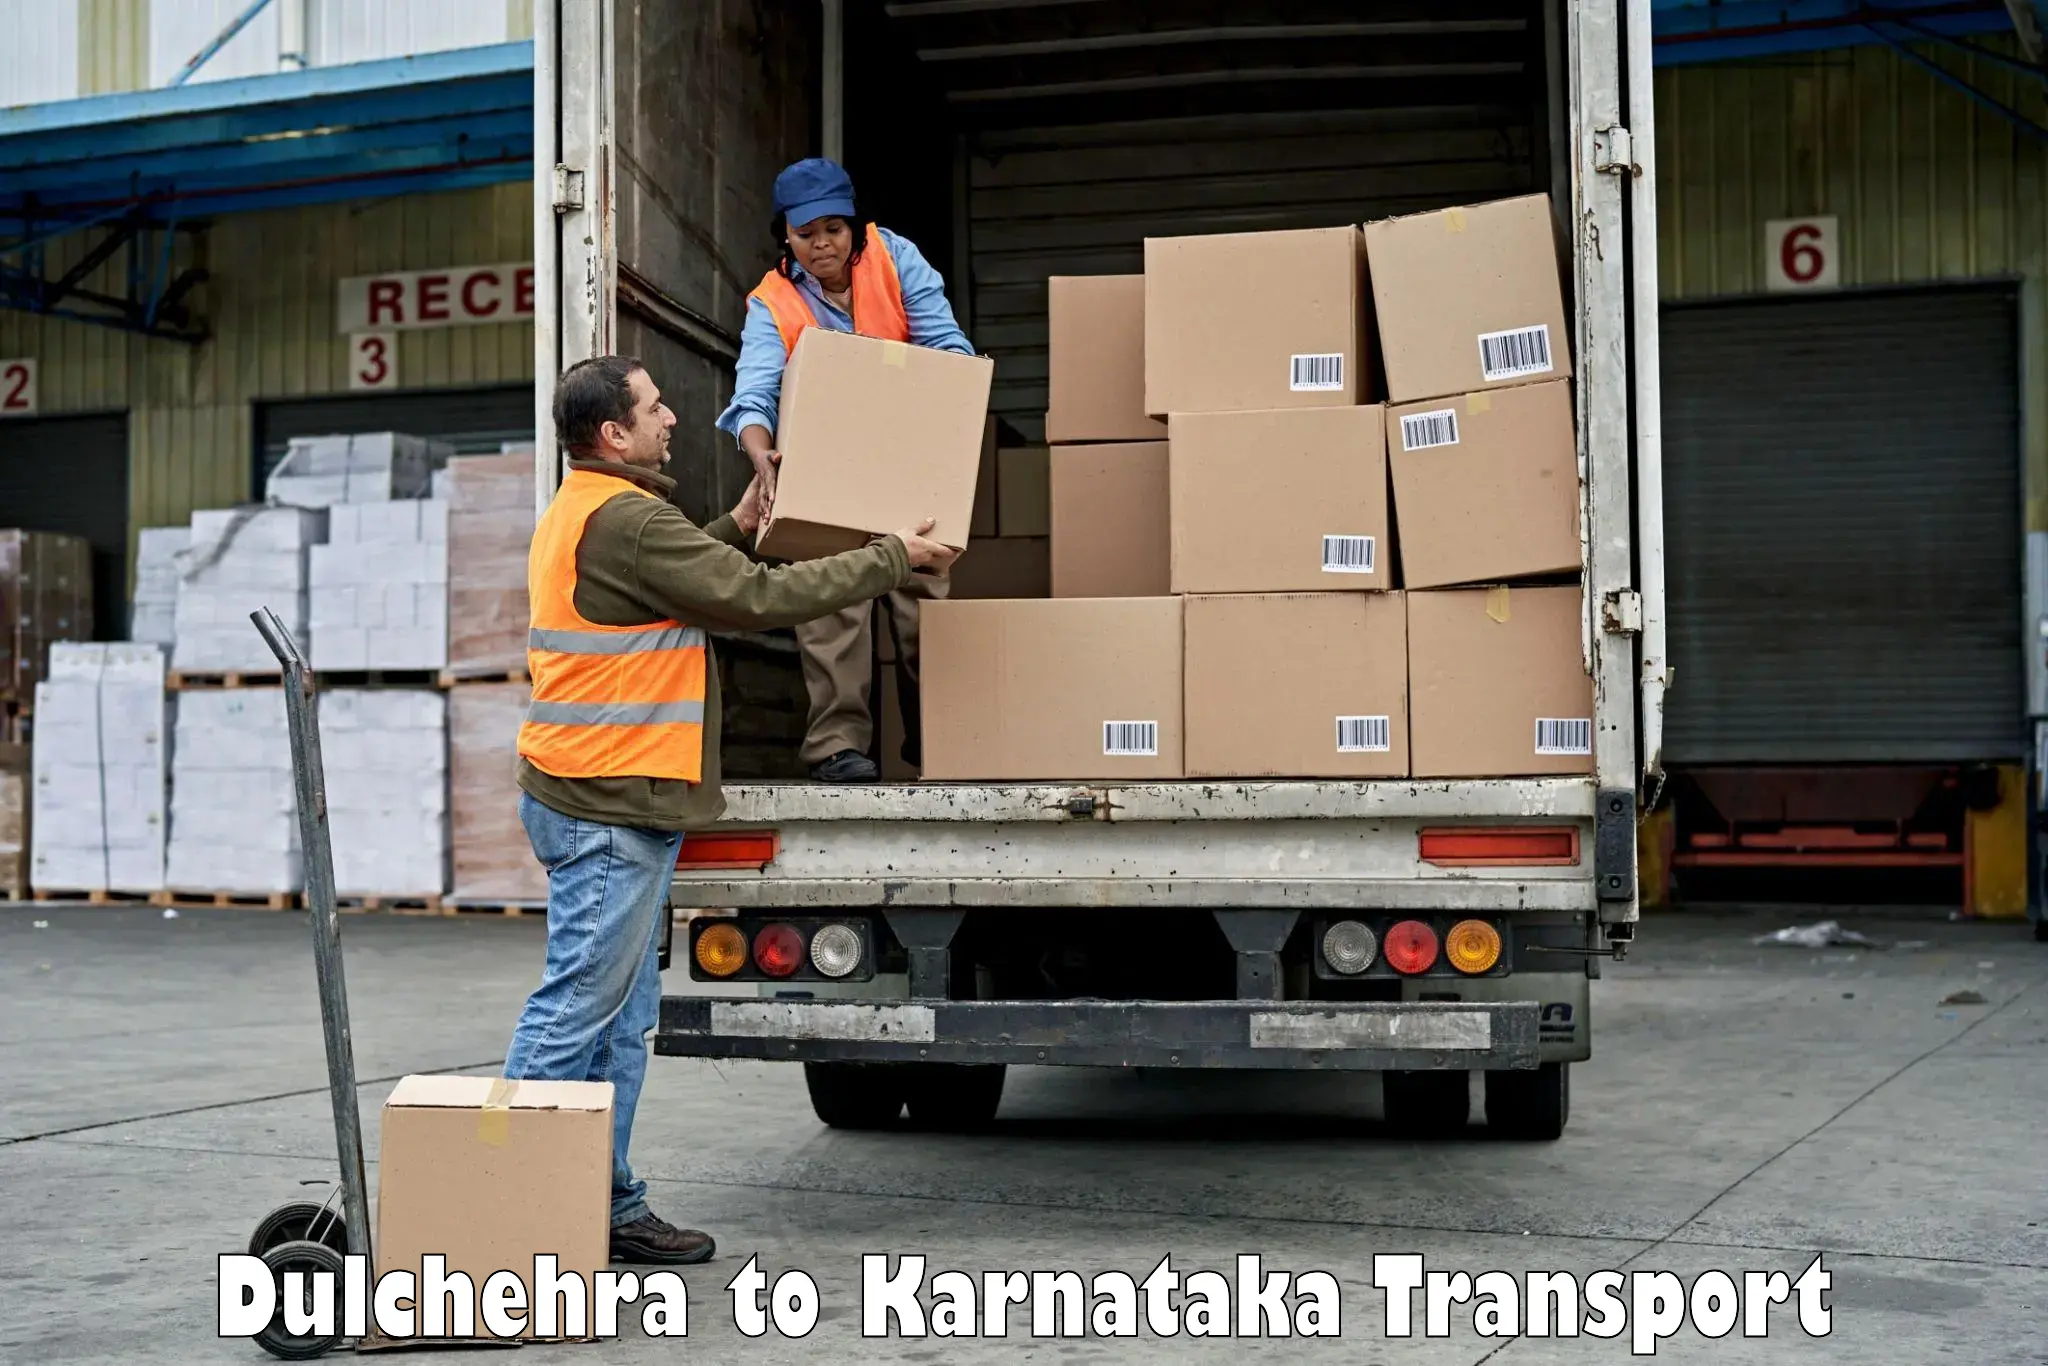 Furniture transport service Dulchehra to Nanjangud